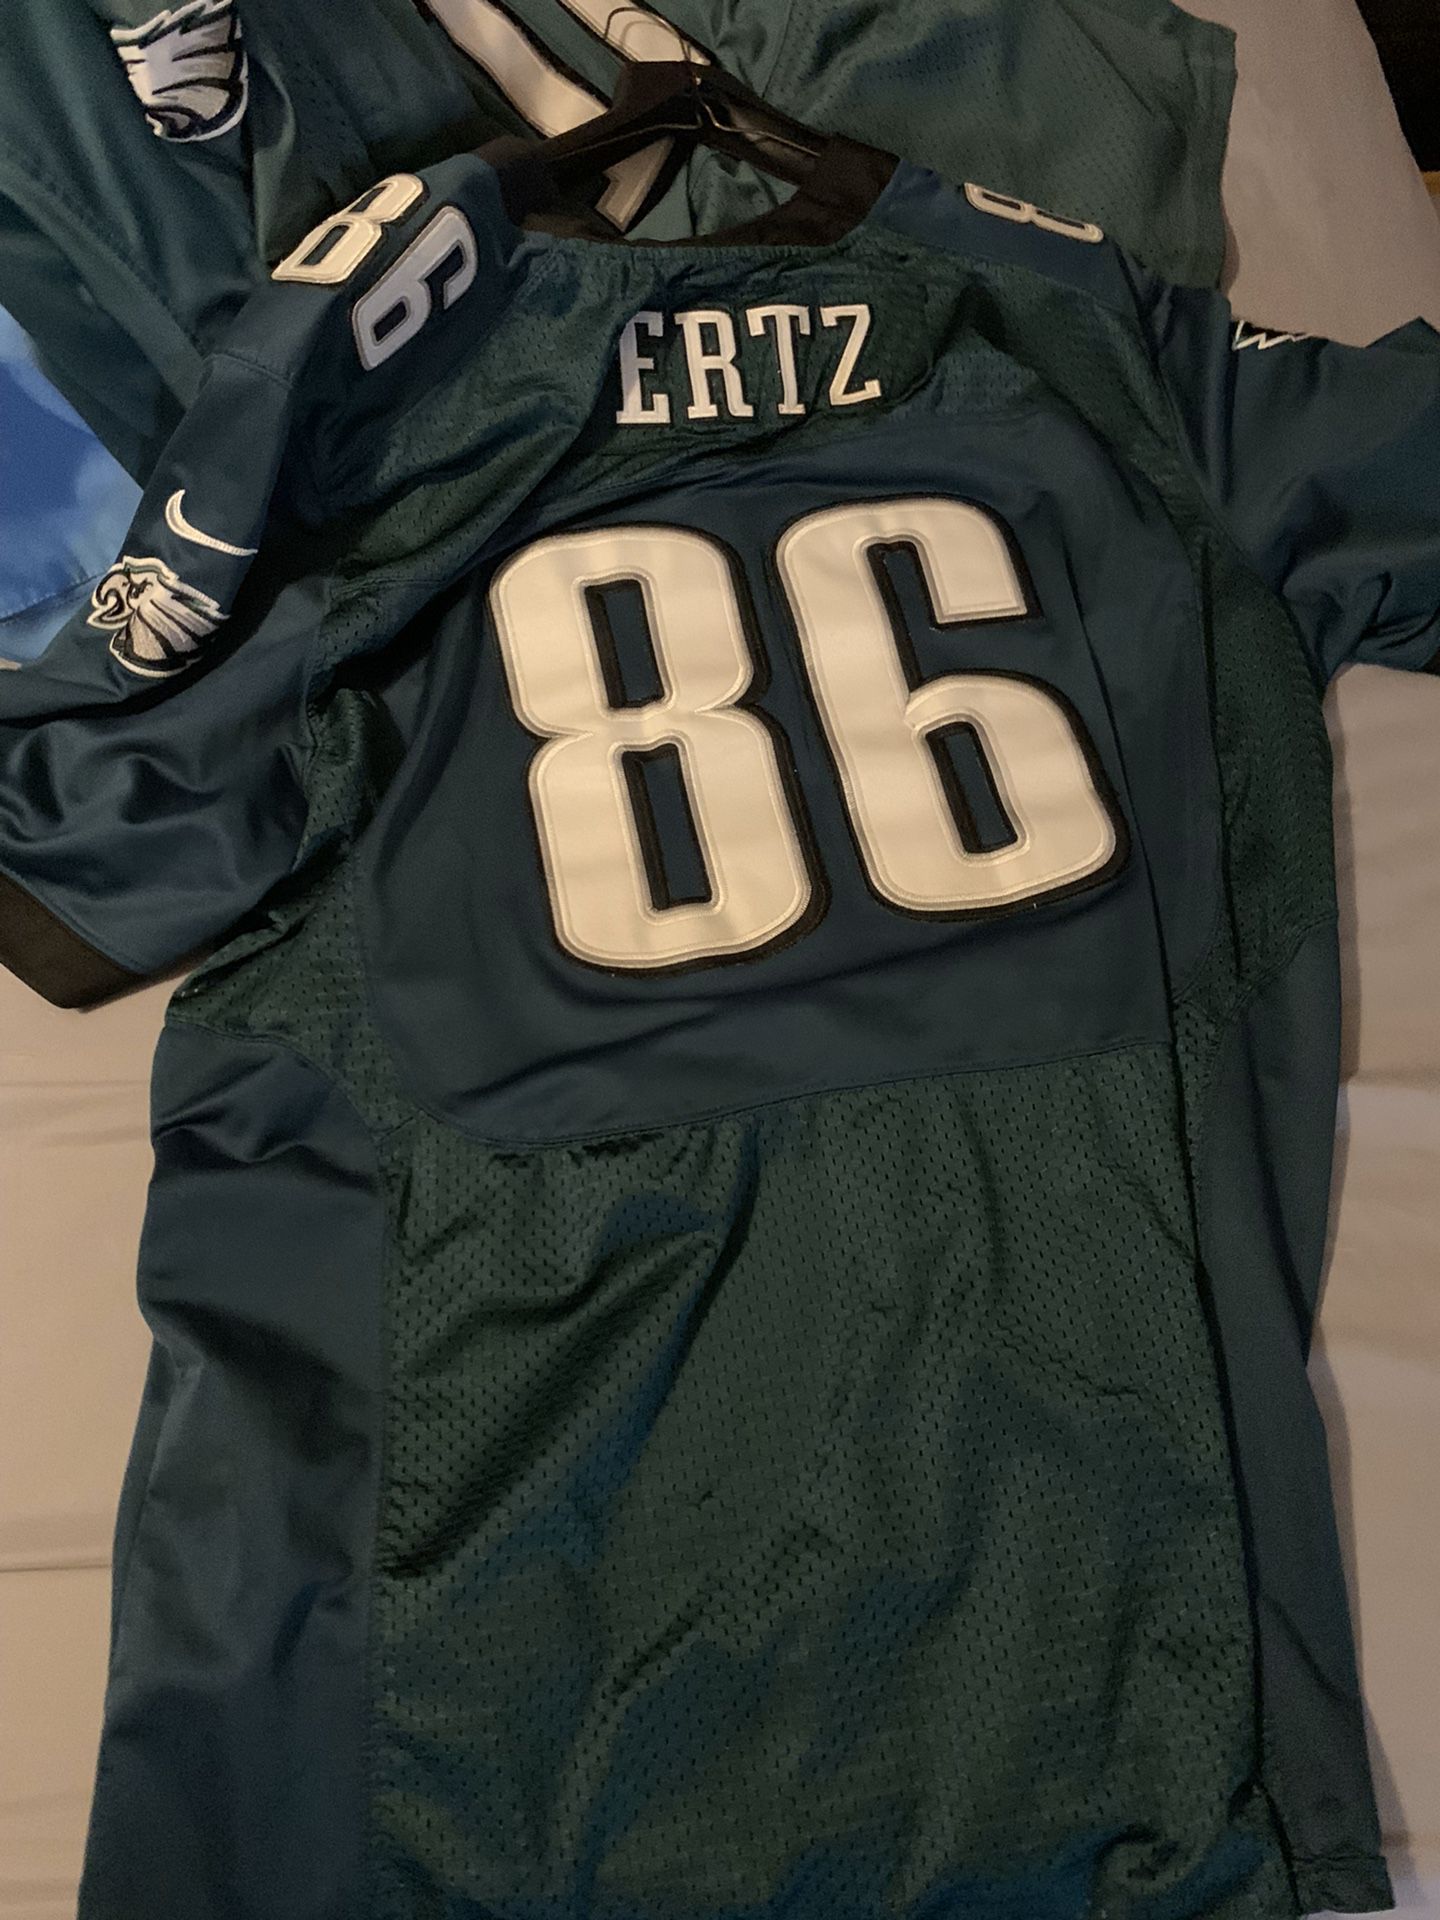 Zach Ertz Stitched Jersey with Super Bowl Patch